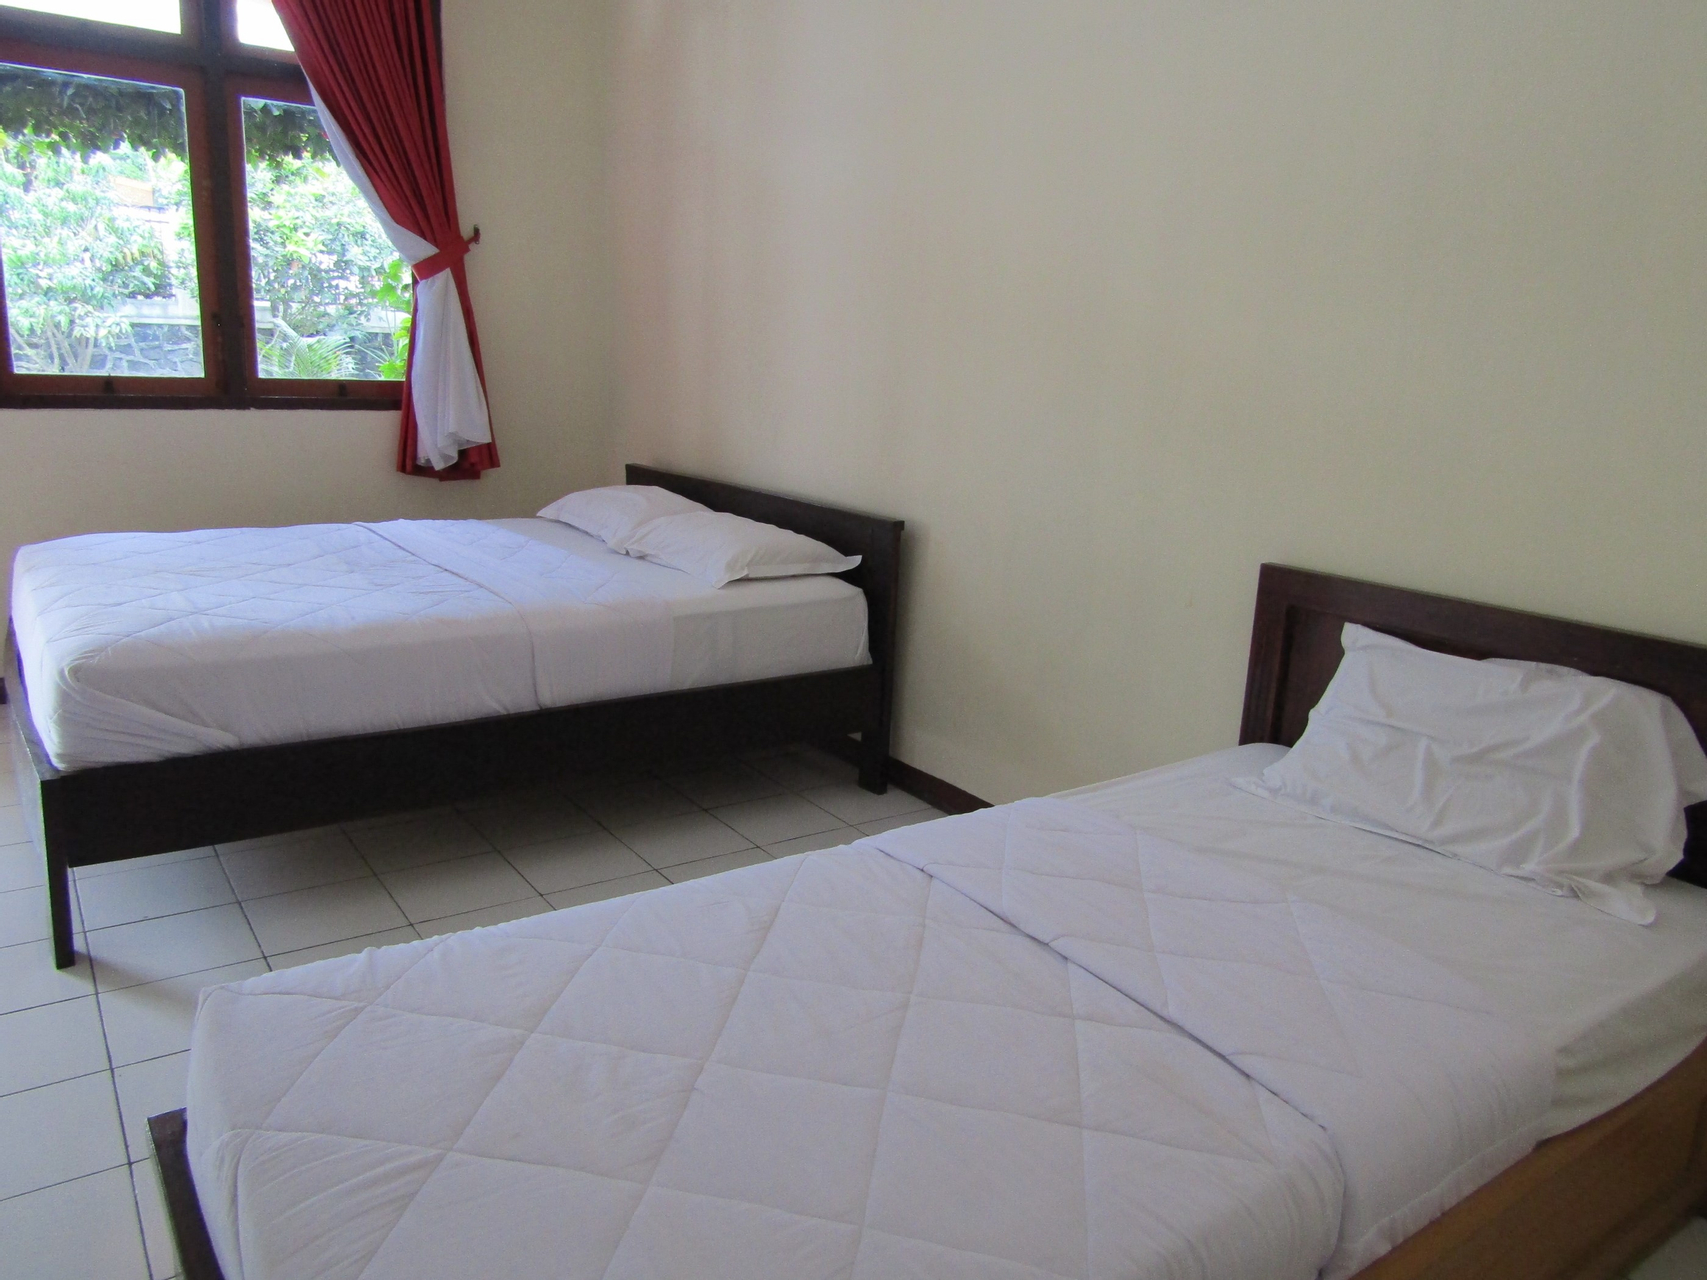 Bedroom 5, BIP Hotel Tawangmangu, Karanganyar